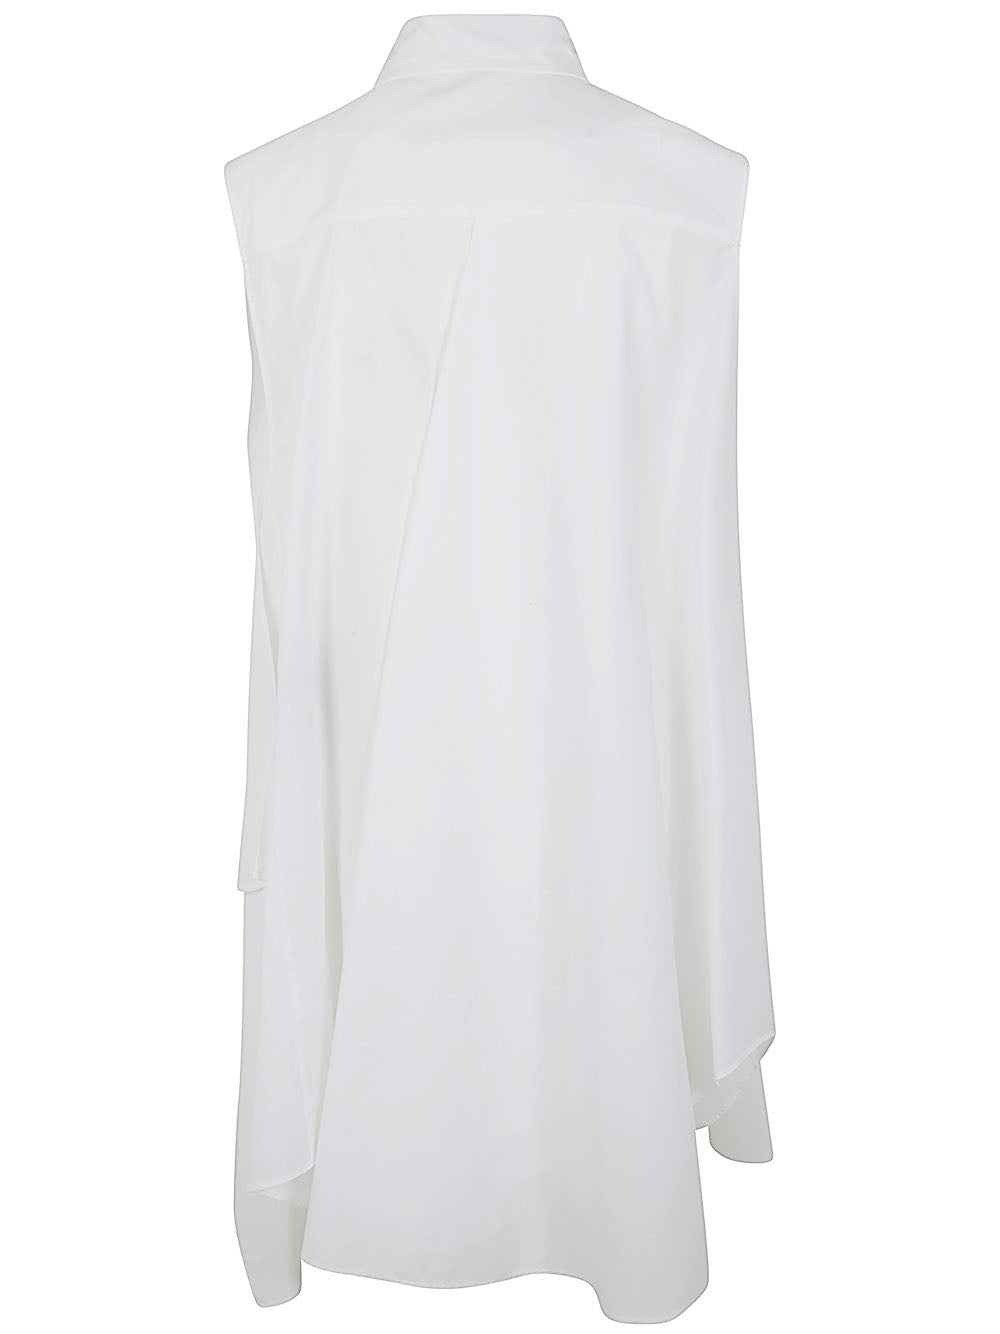 Iona Asymmetrical Oversized Shirt Light Crumpled Cotton White